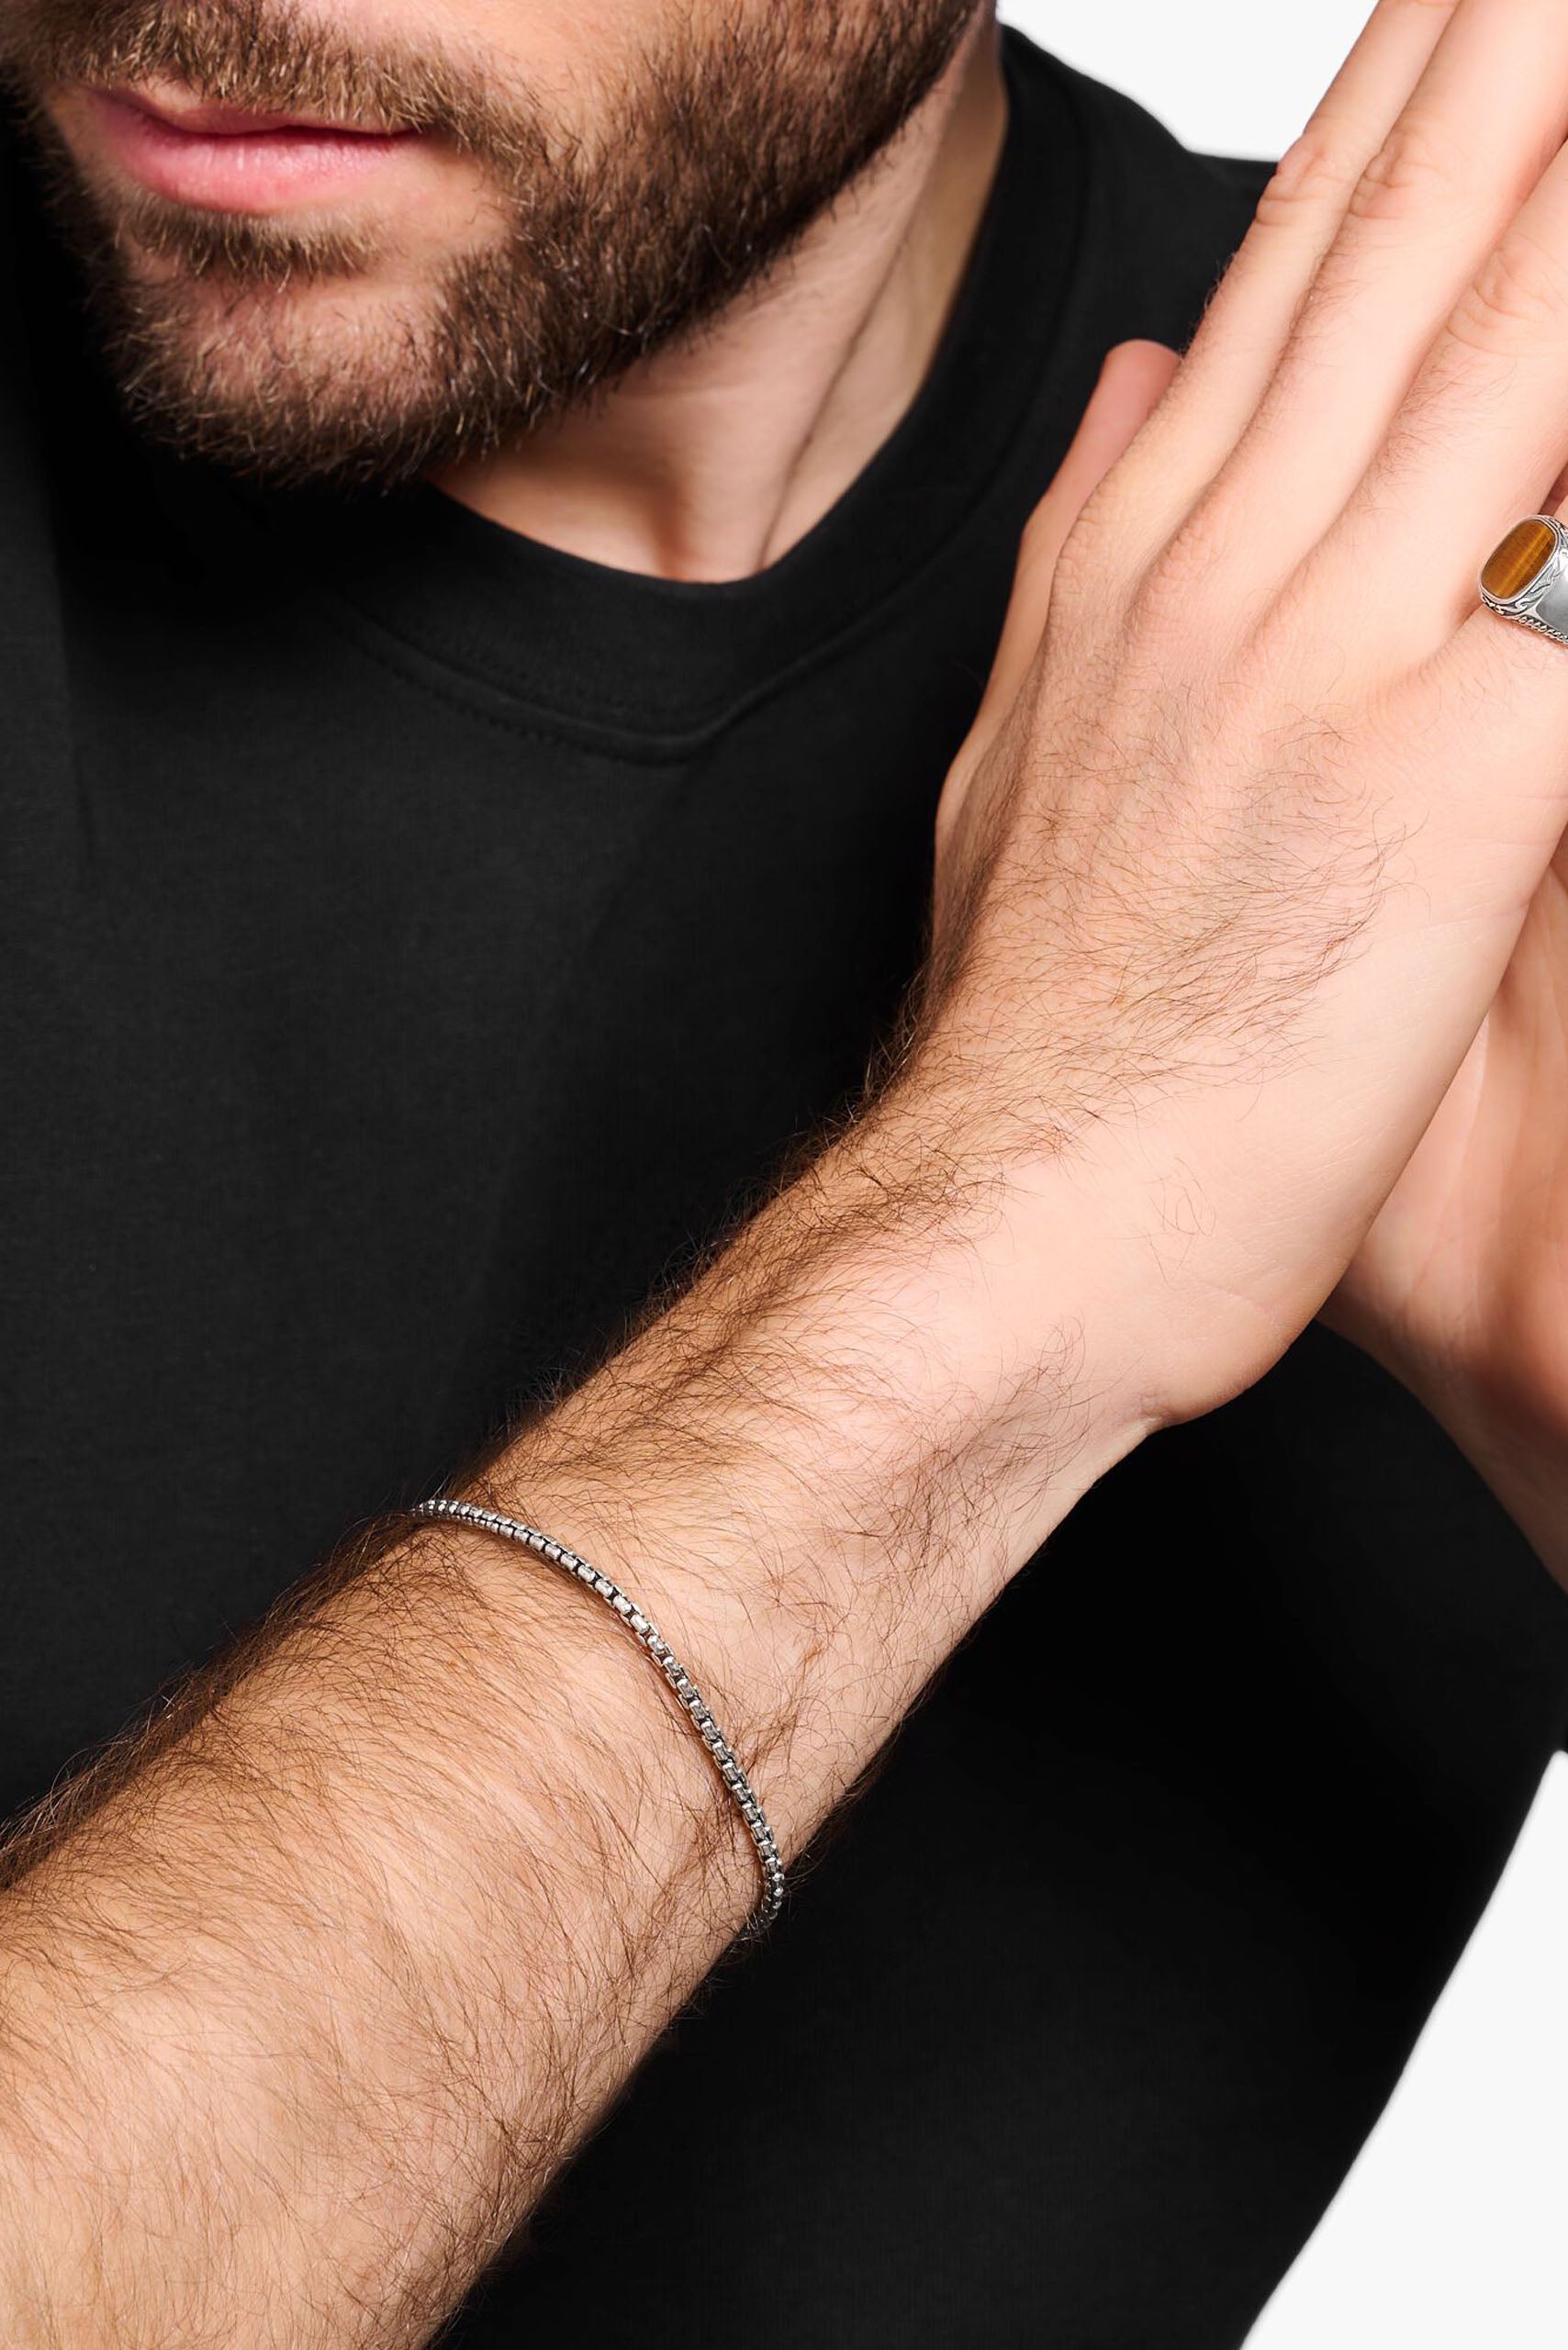 Thomas Sabo Venezia bracelet hopeinen rannekoru 17,5cm